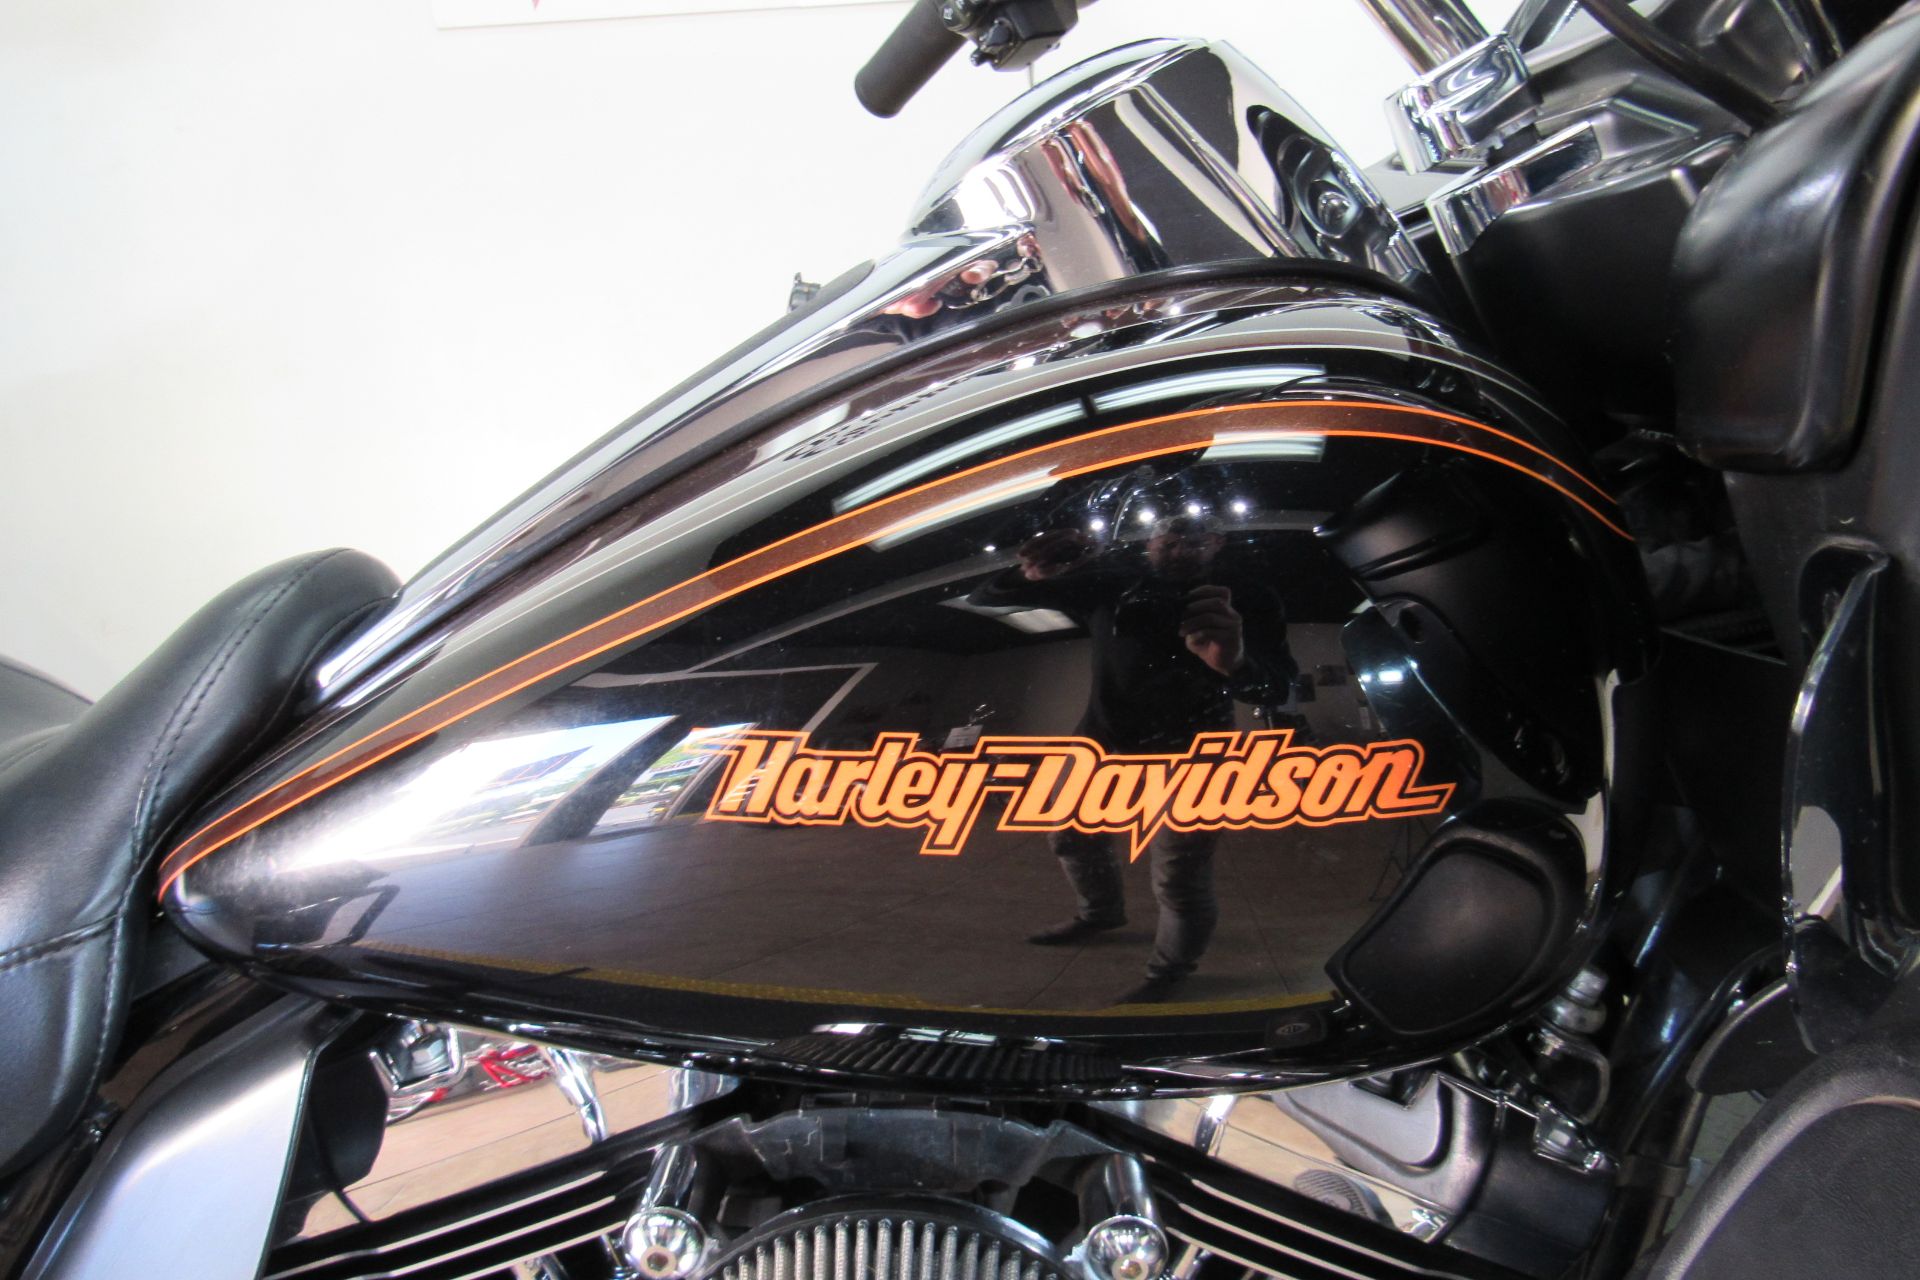 2016 Harley-Davidson Road Glide® Ultra in Temecula, California - Photo 7